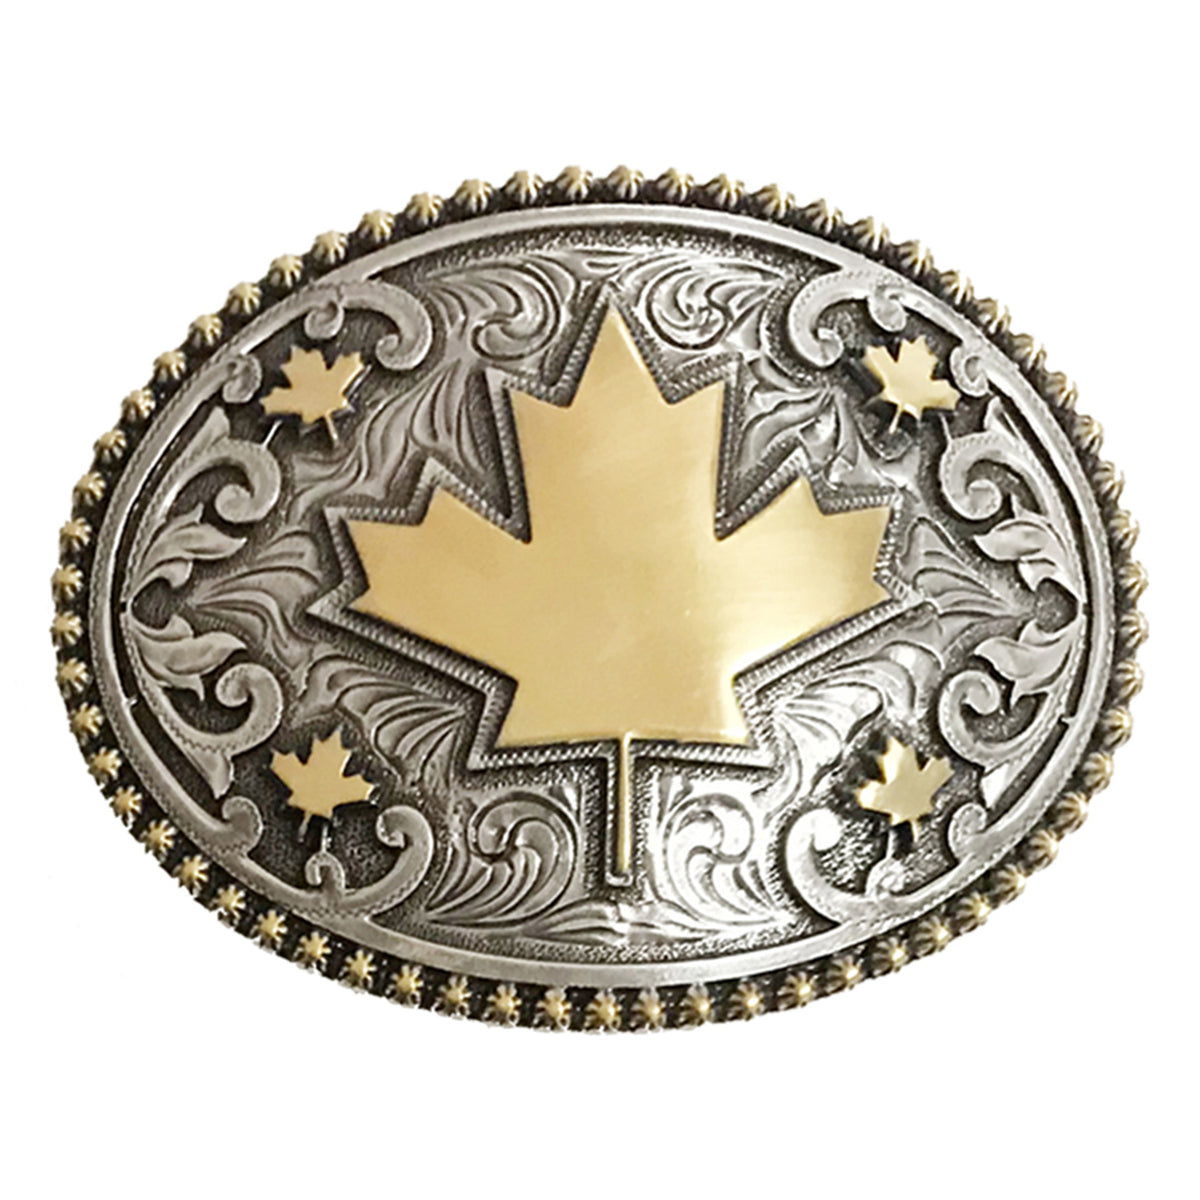 Canada Classic Maple Leaf Buckle